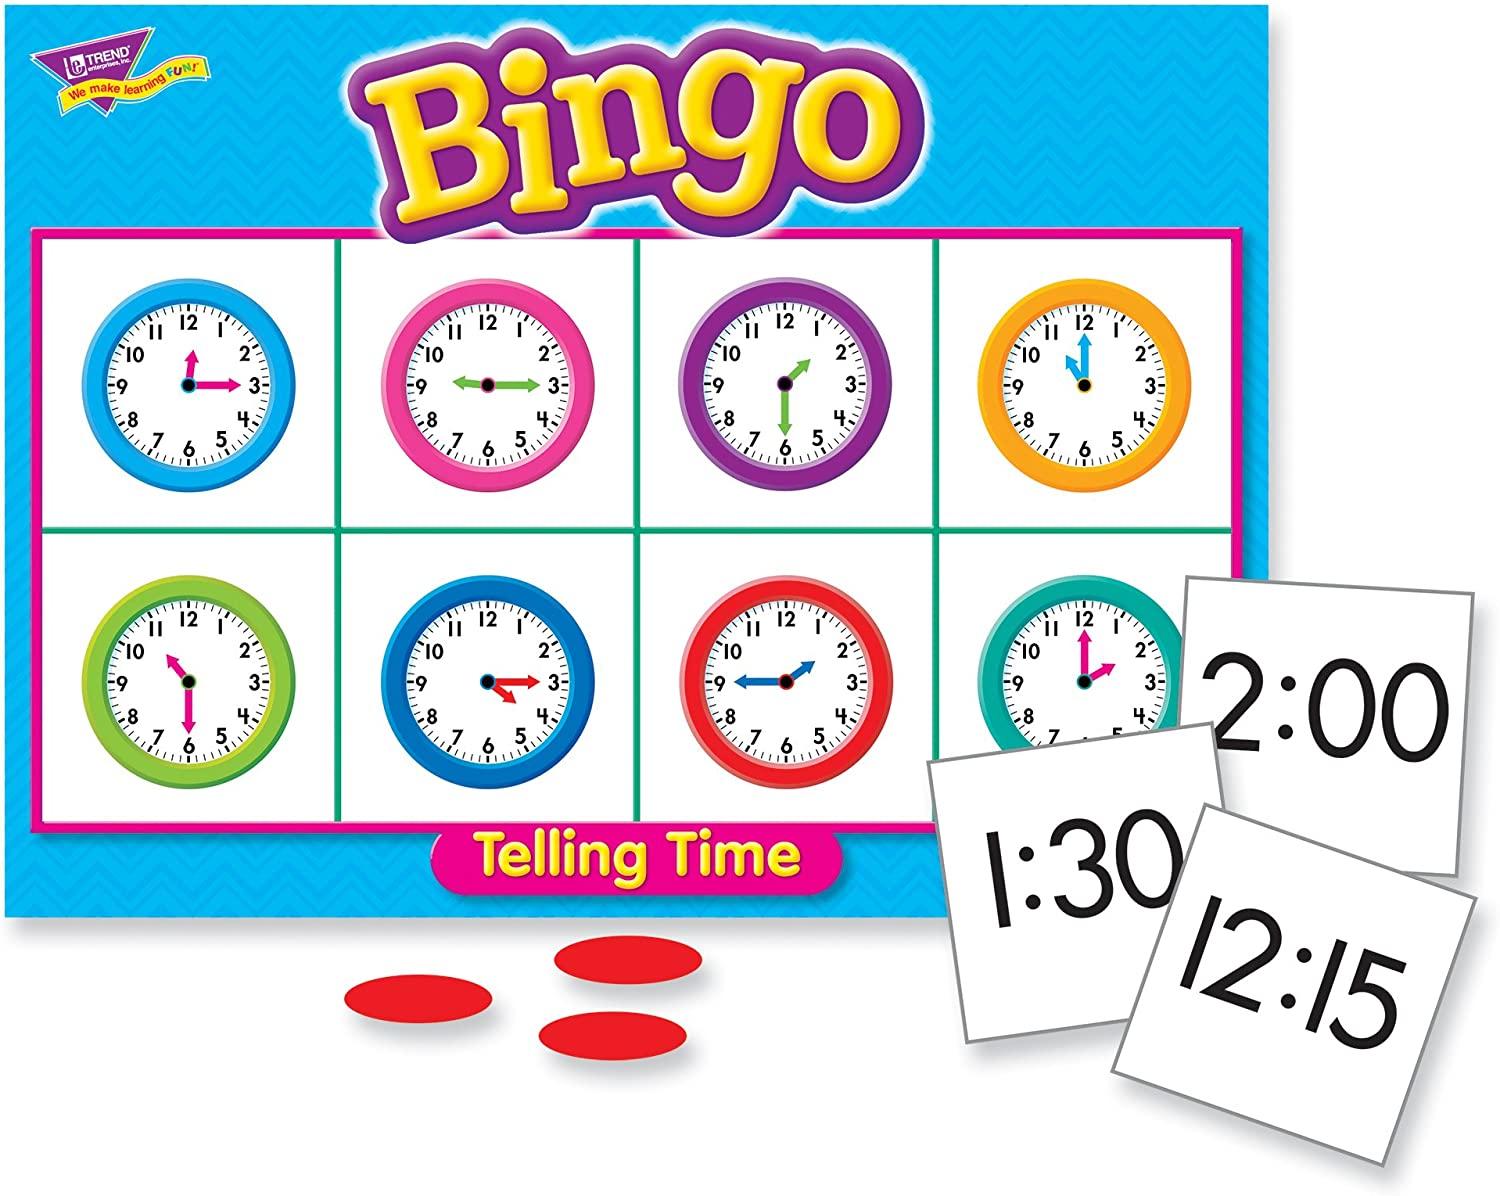 Jeu Educatif | Trend Young des apprenants Jeu de bingo, Tell Time (T6072)